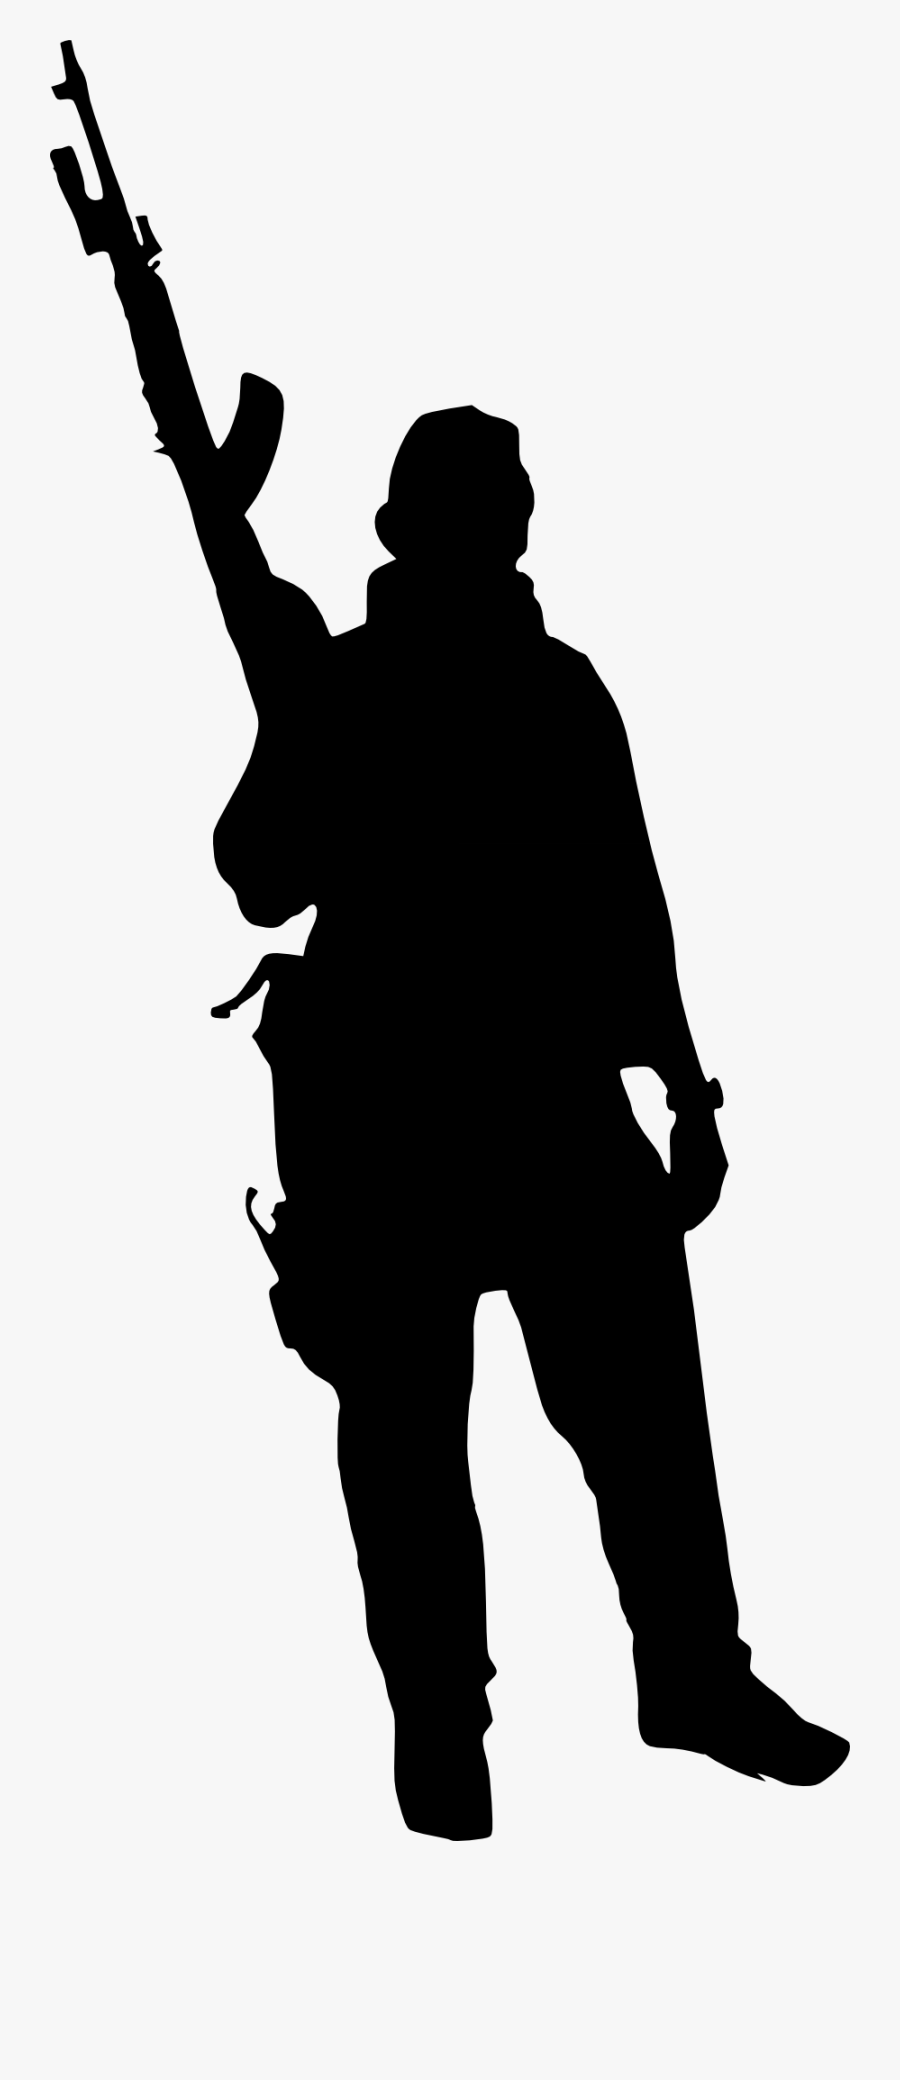 10 Soldier Silhouette - Soldier Silhouette Transparent Background, Transparent Clipart